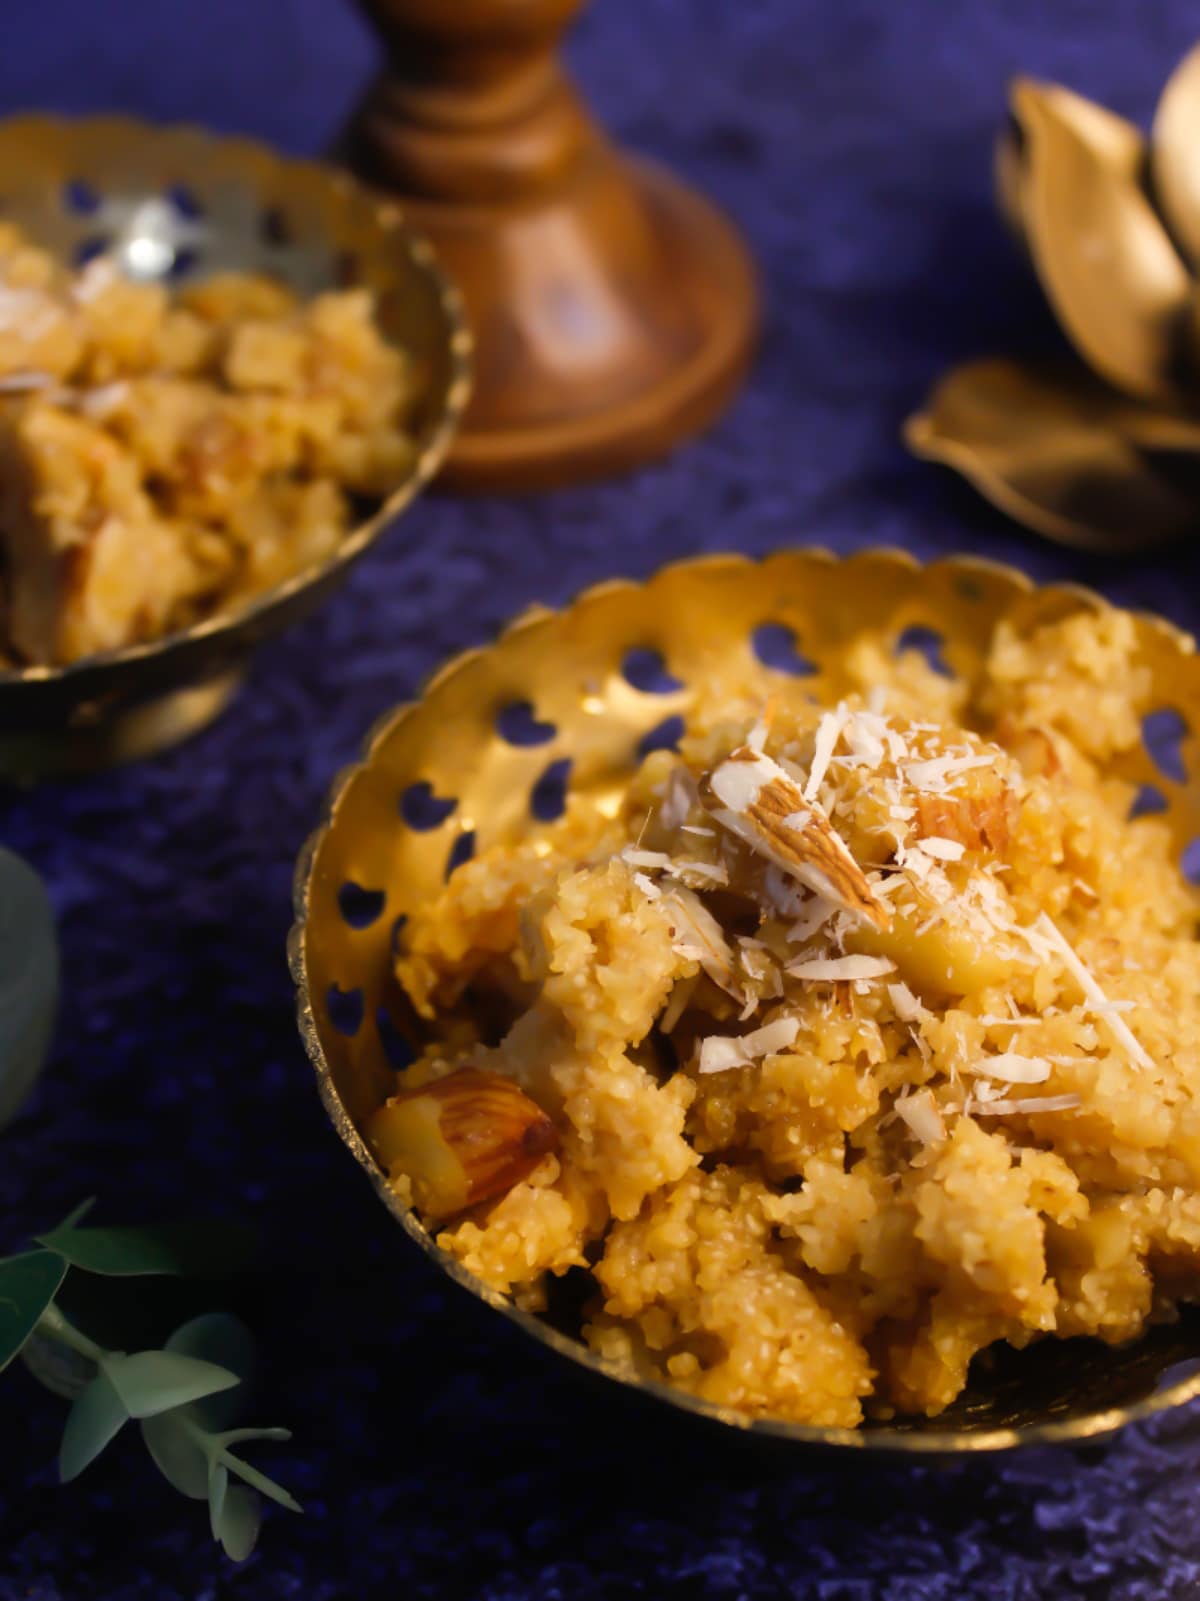 Sooji Halwa: Easy Semolina Pudding served in a golden bowl